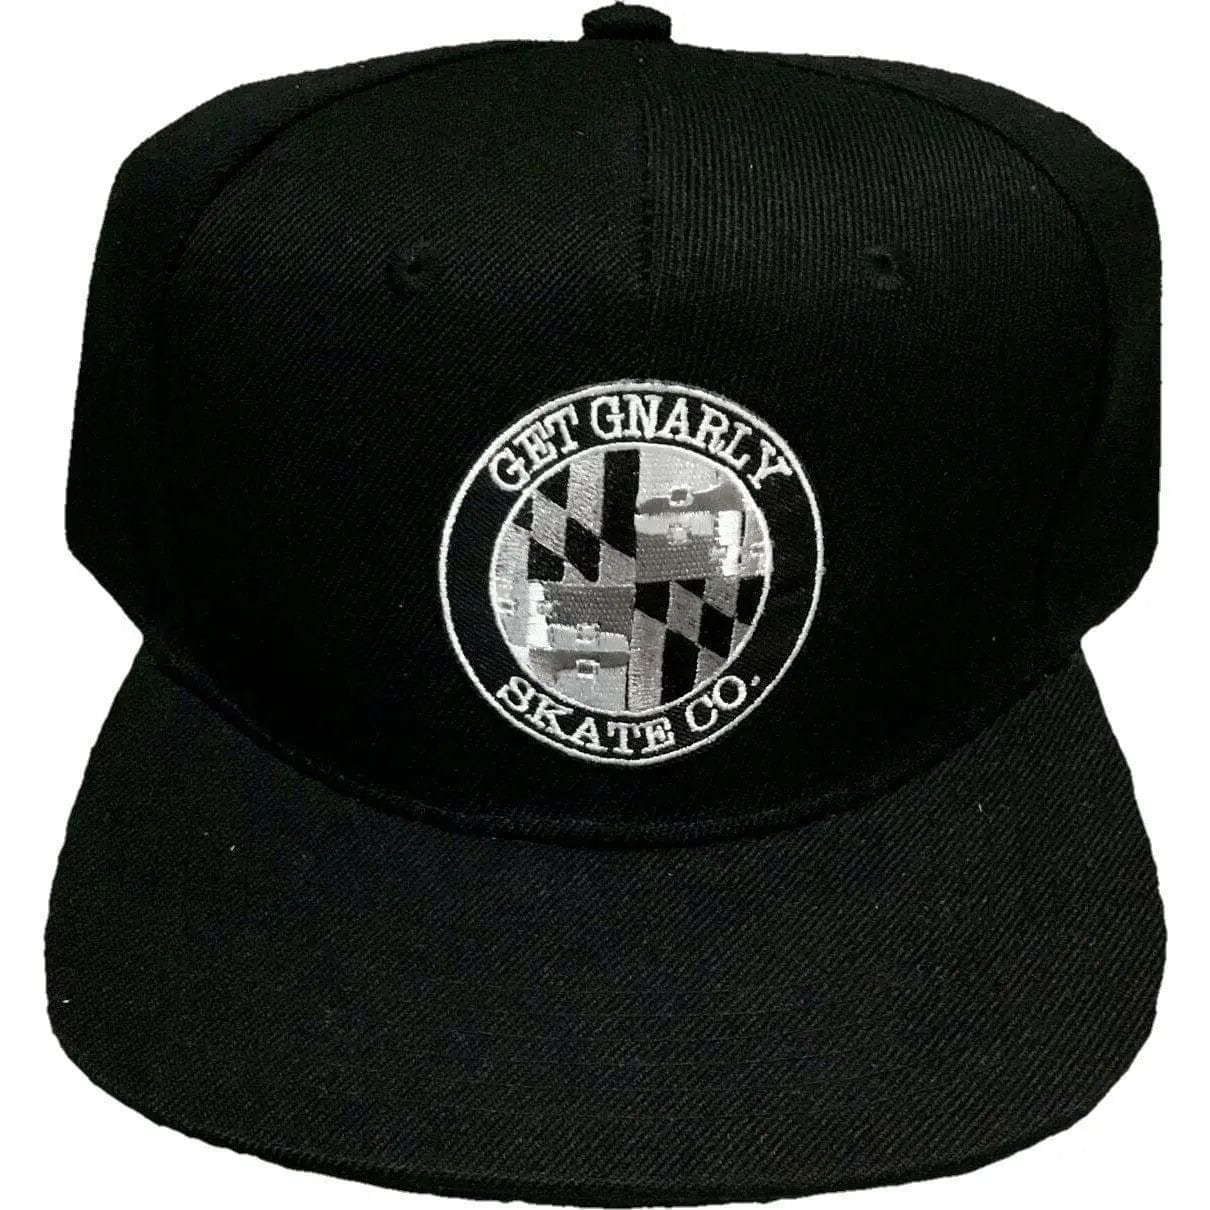 Skate Co. Shield Snapback-Hat-Get Gnarly 